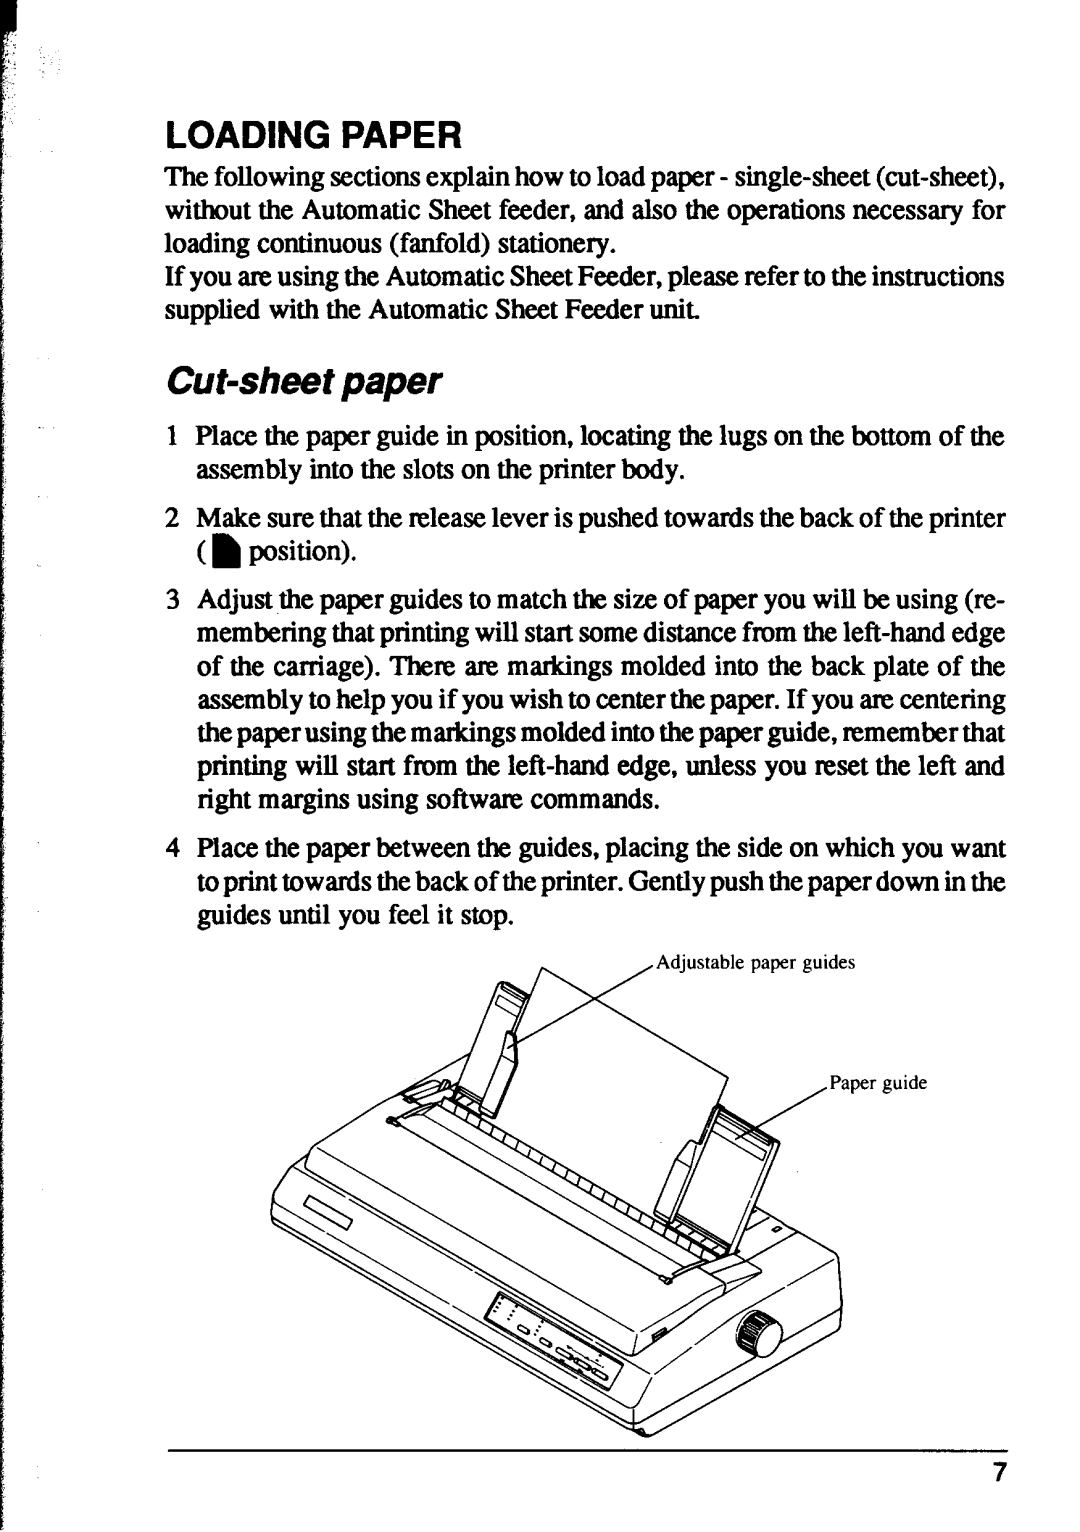 Star Micronics XR-1000, XR-1500 user manual Loading Paper, Cut-sheet paper 